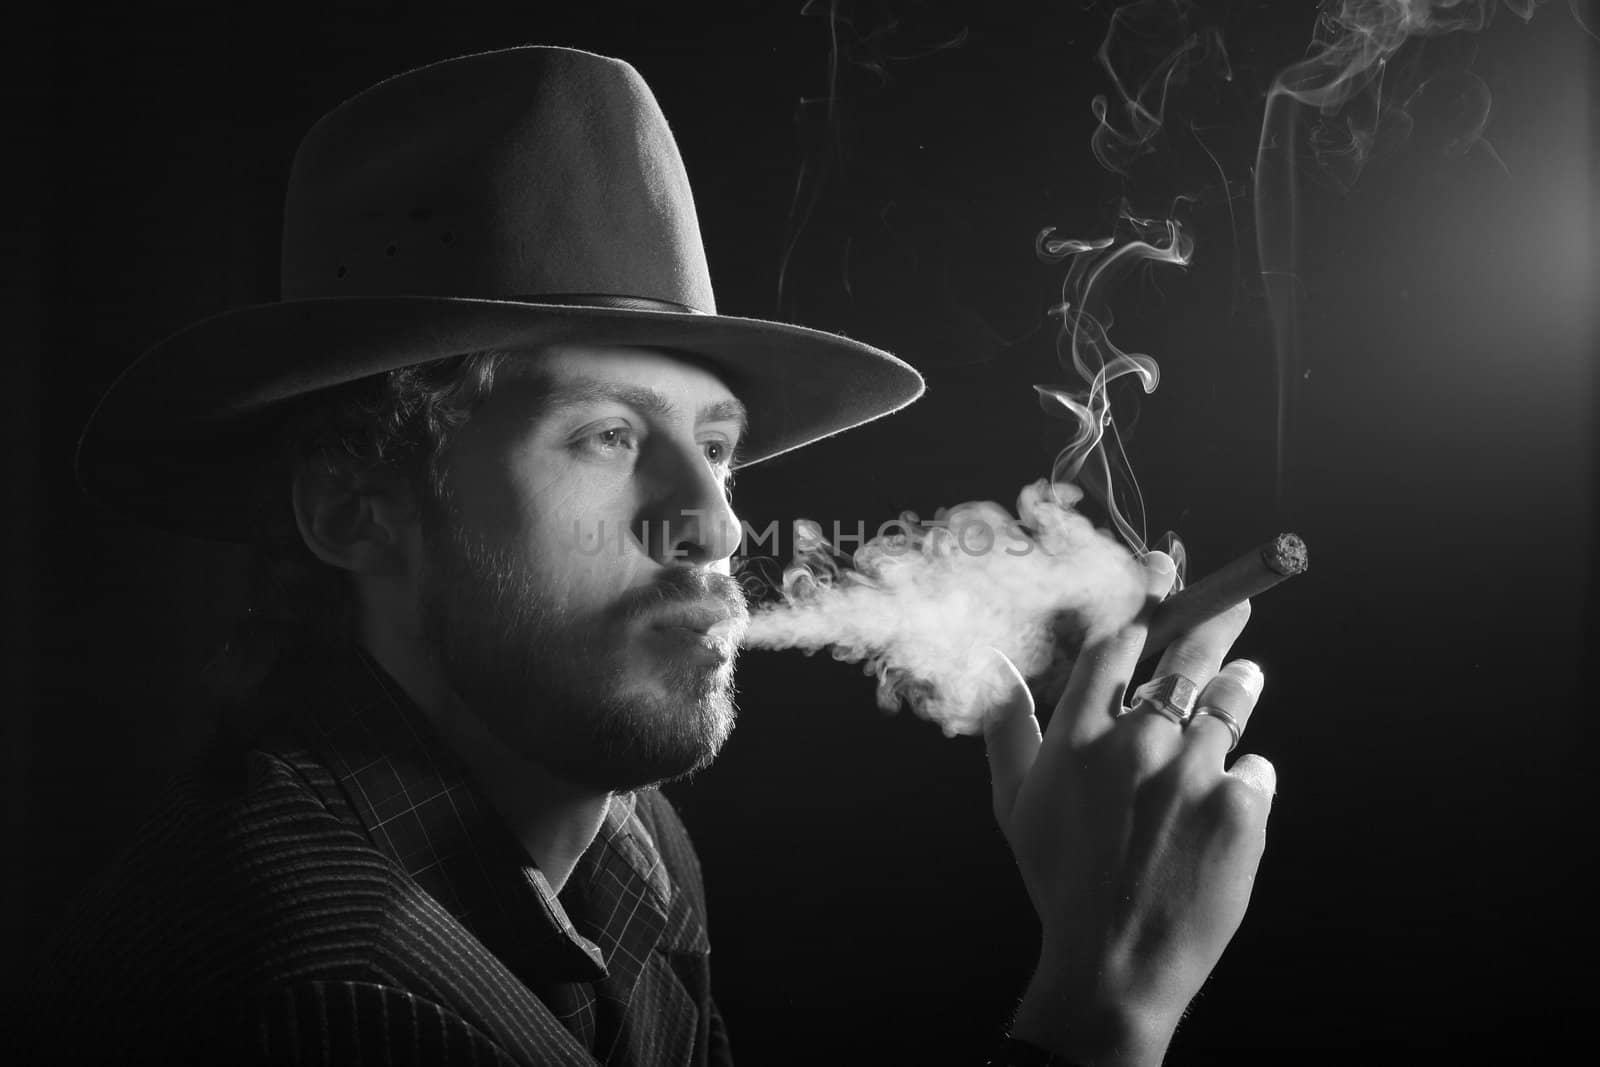 A man with a cigar making puffs of smoke